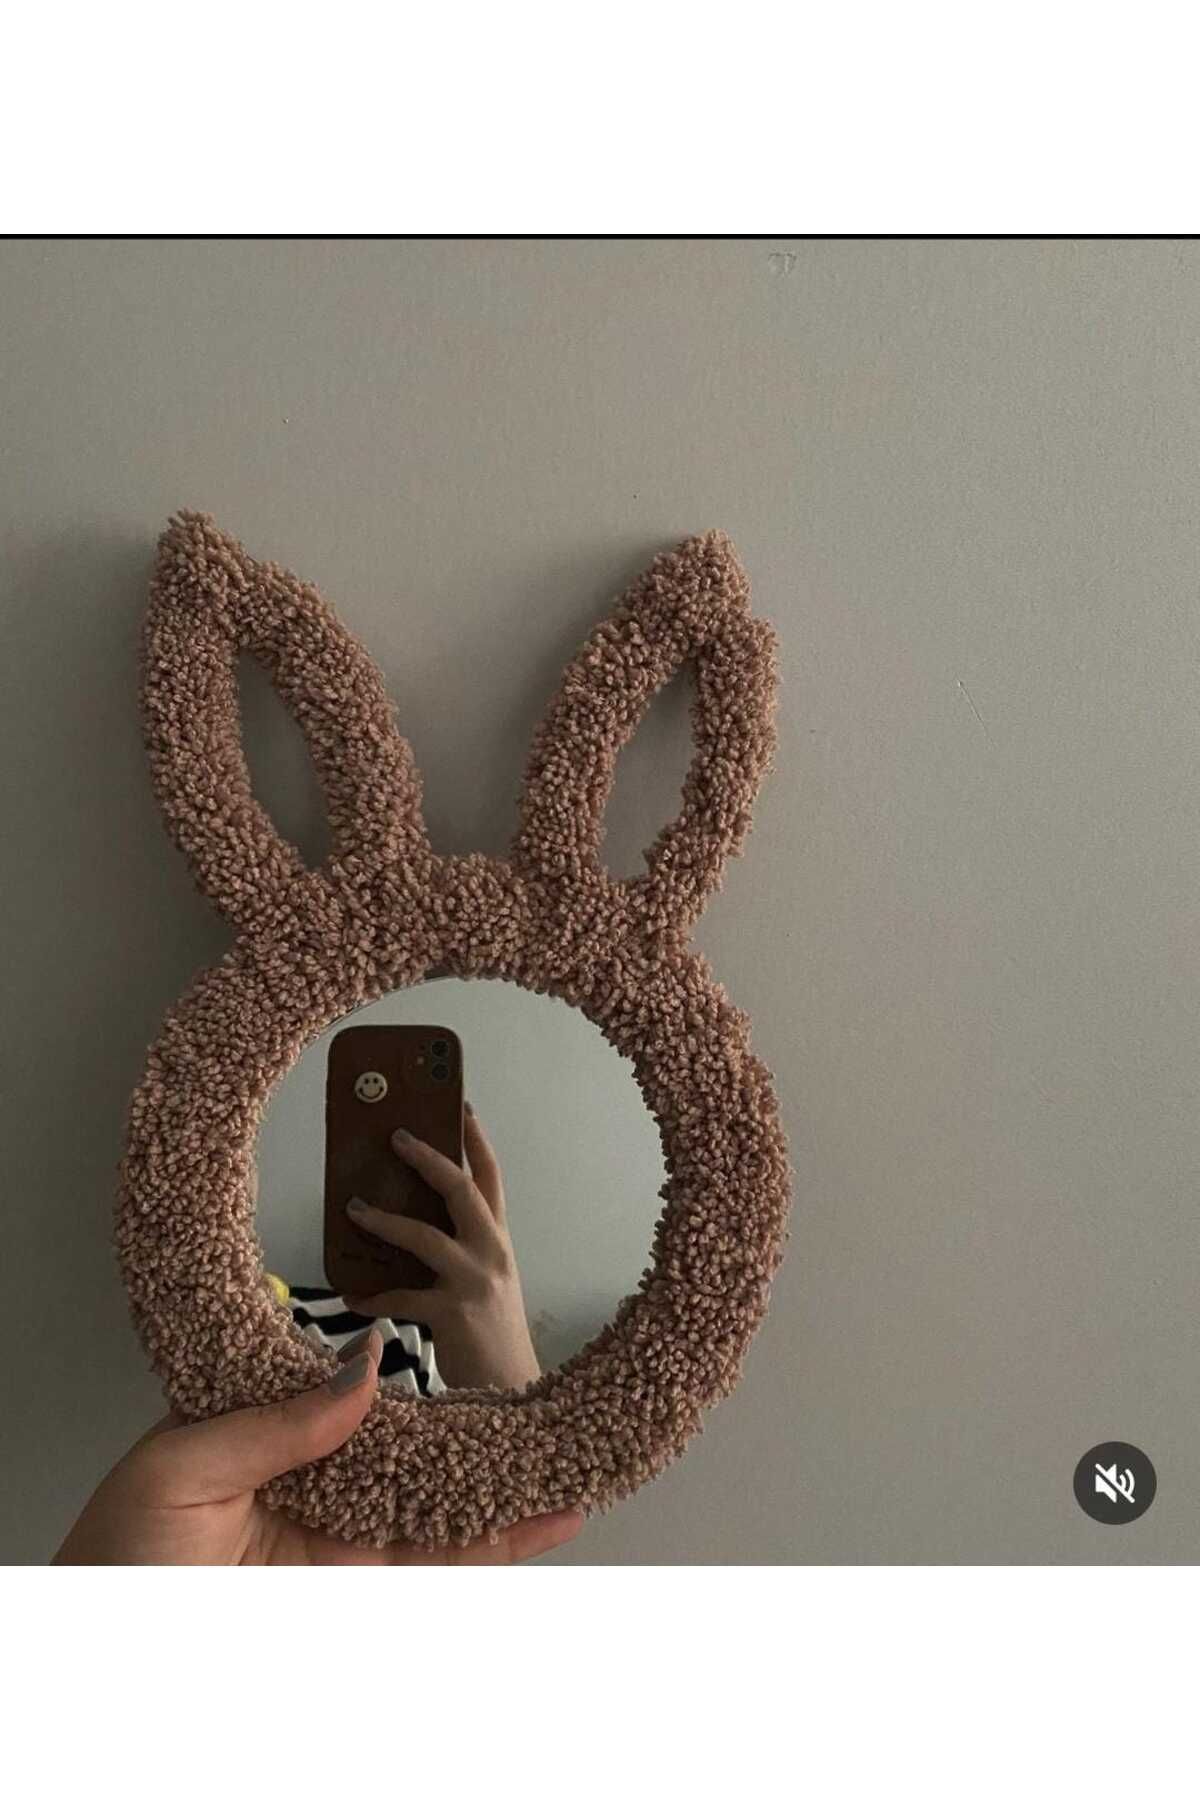 Sleepy bunny mirror – oak